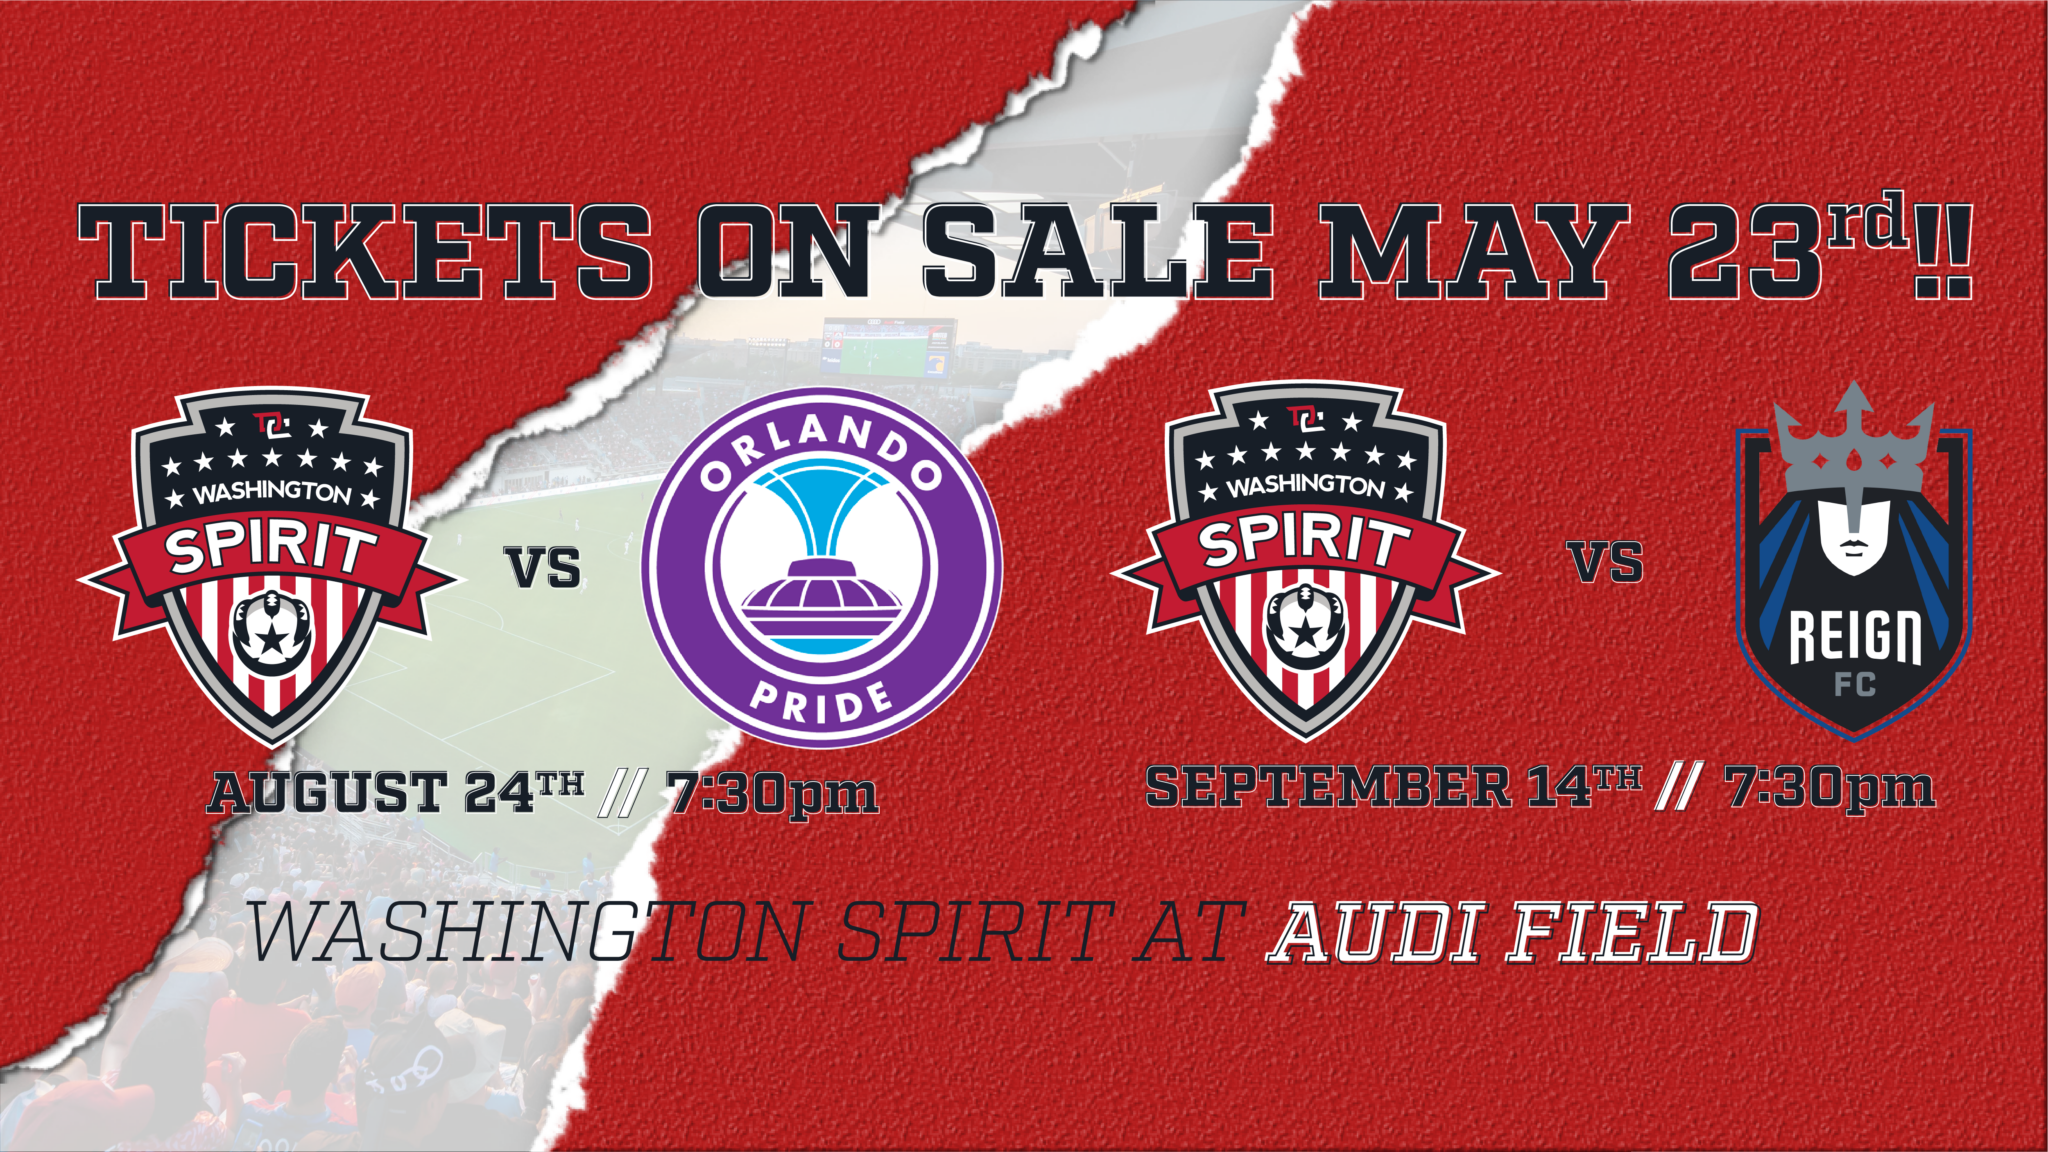 Washington Spirit Audi Field Tickets go on sale May 23 Featured Image